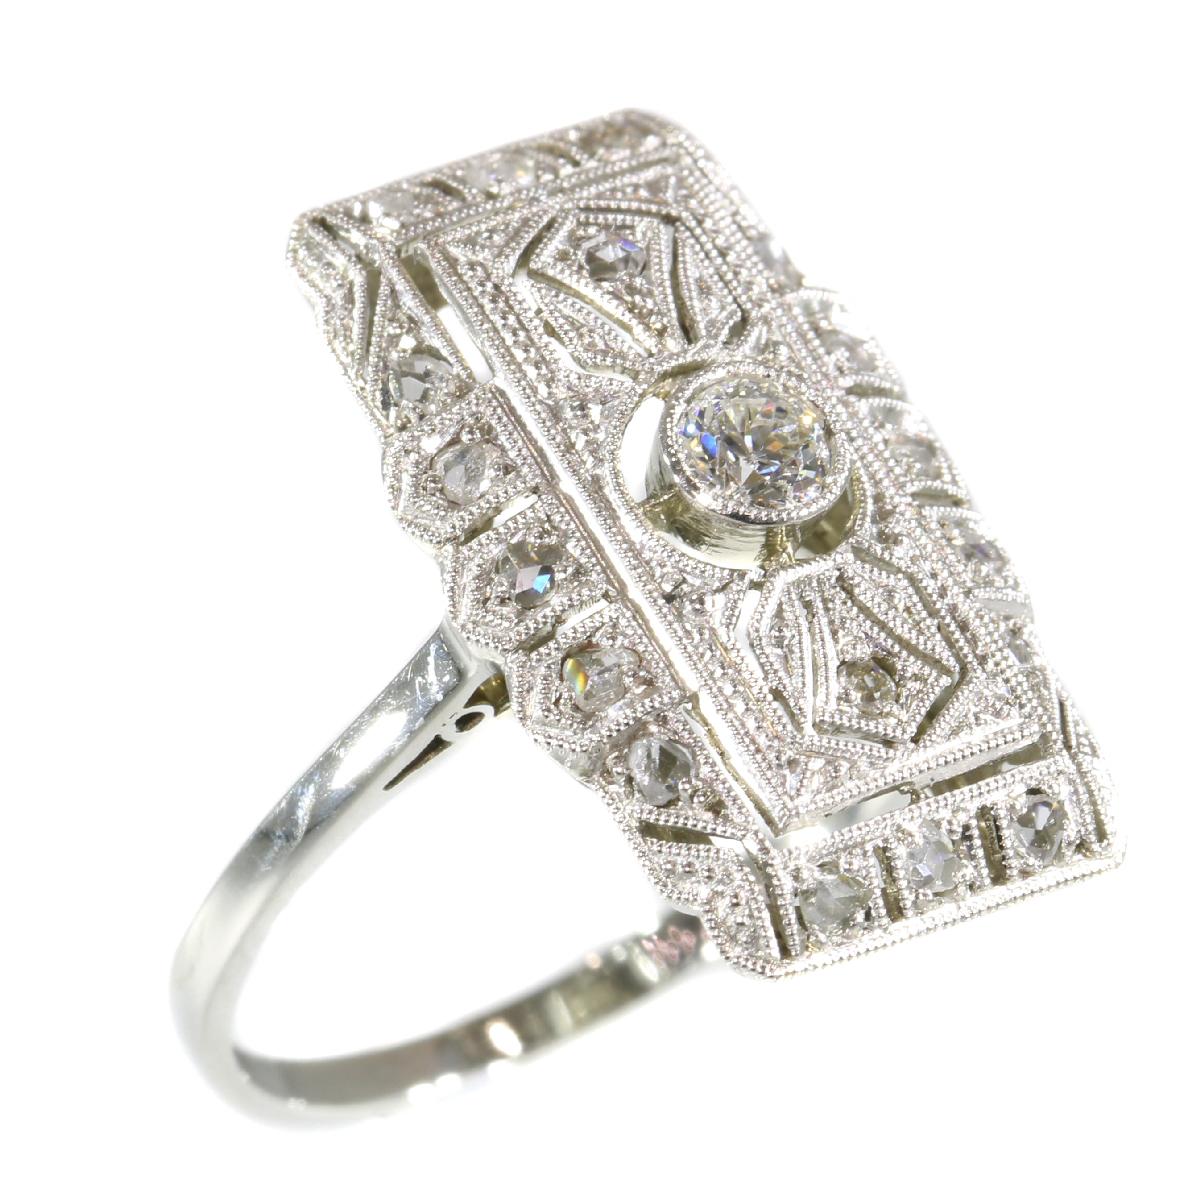  Edwardian Art Deco Diamond Engagement Ring For Sale 3